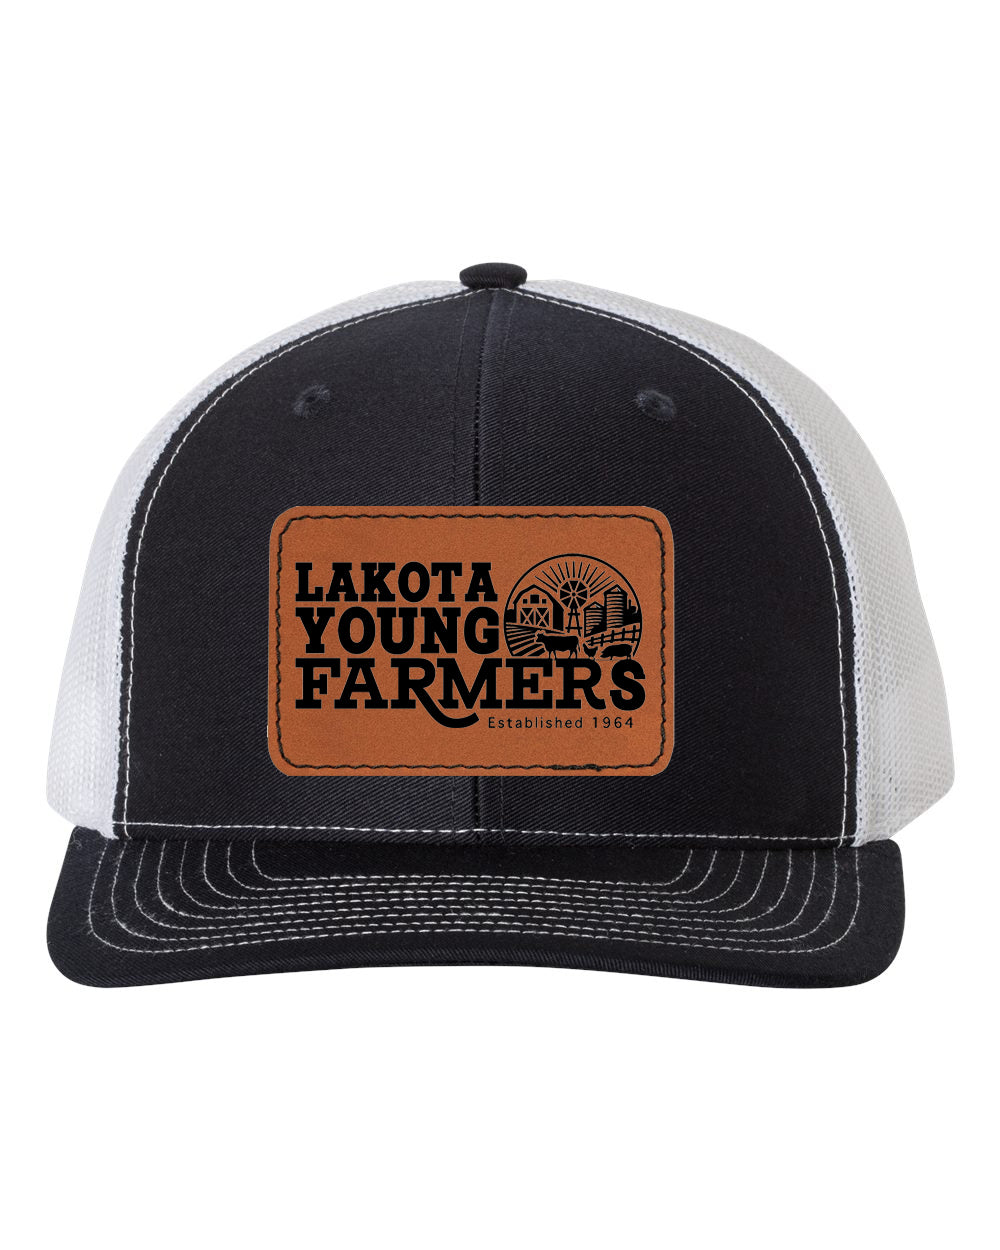 LYF Richardson 112 Leather Patch Hat